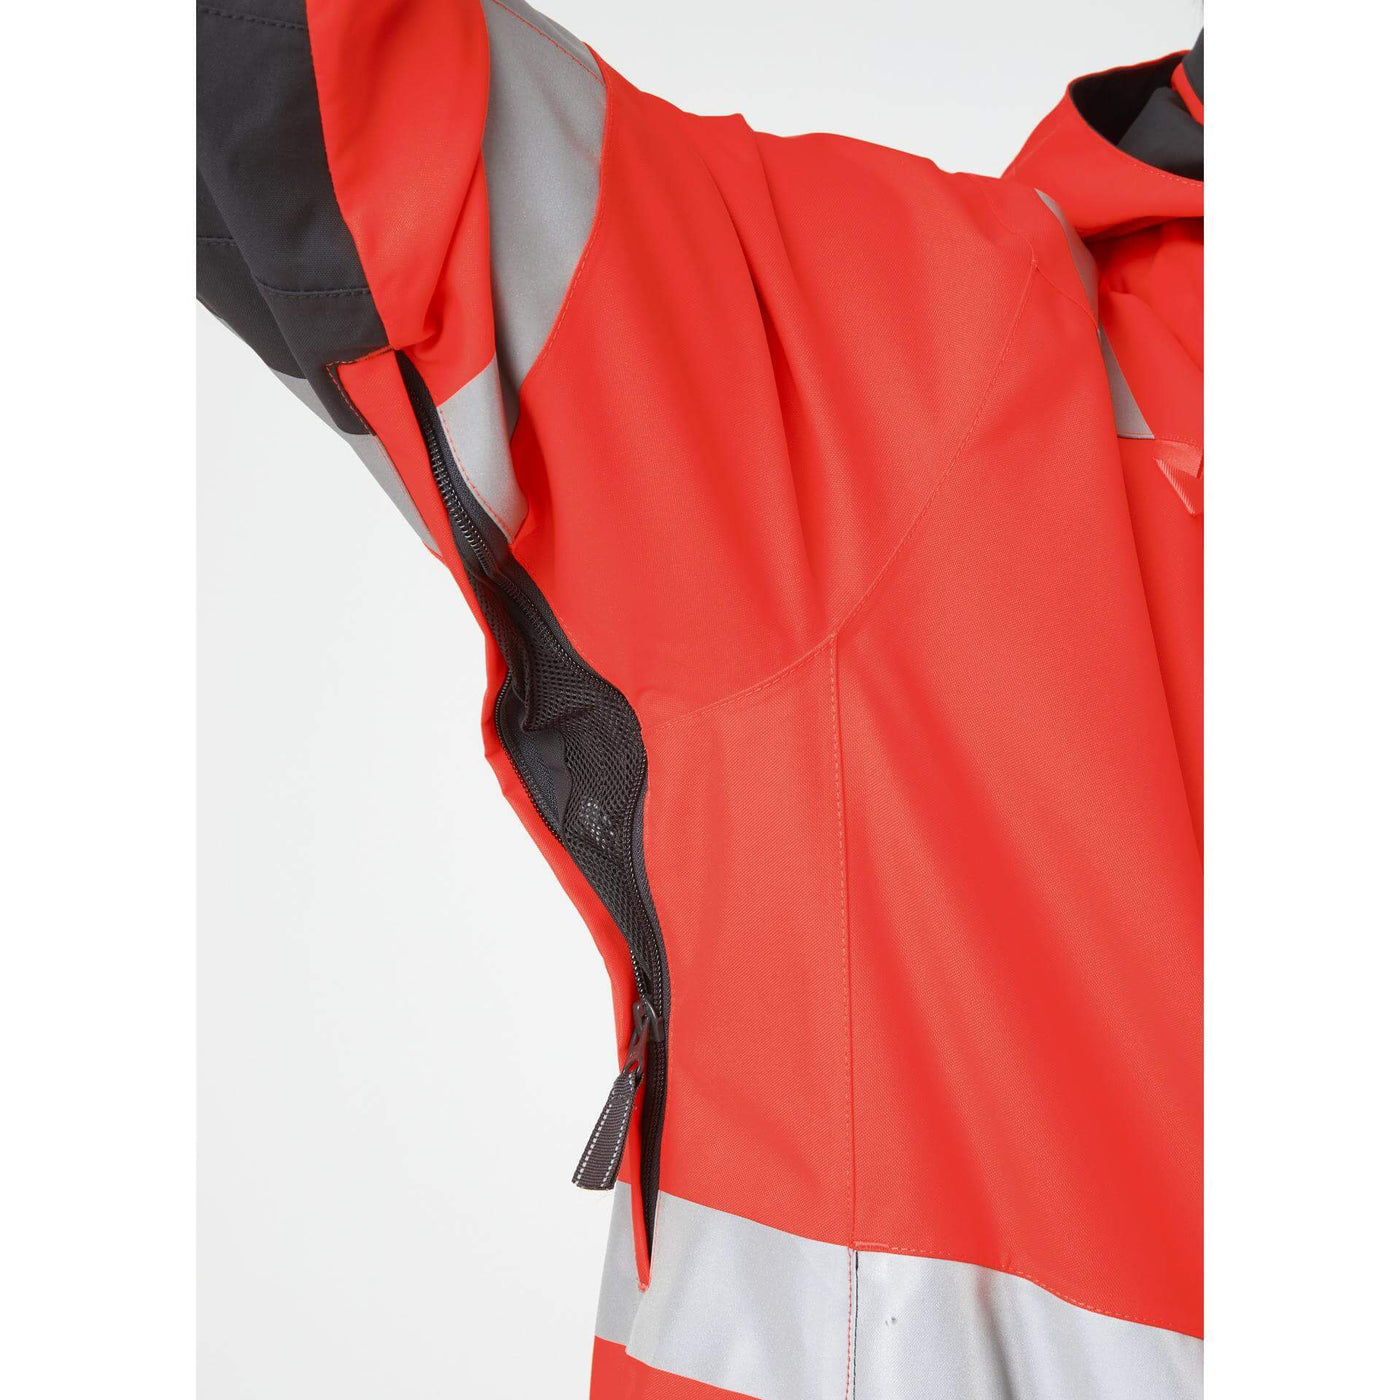 Helly Hansen Alna 2.0 Hi Vis Waterproof Shell Jacket Red/Ebony Feature 3#colour_red-ebony